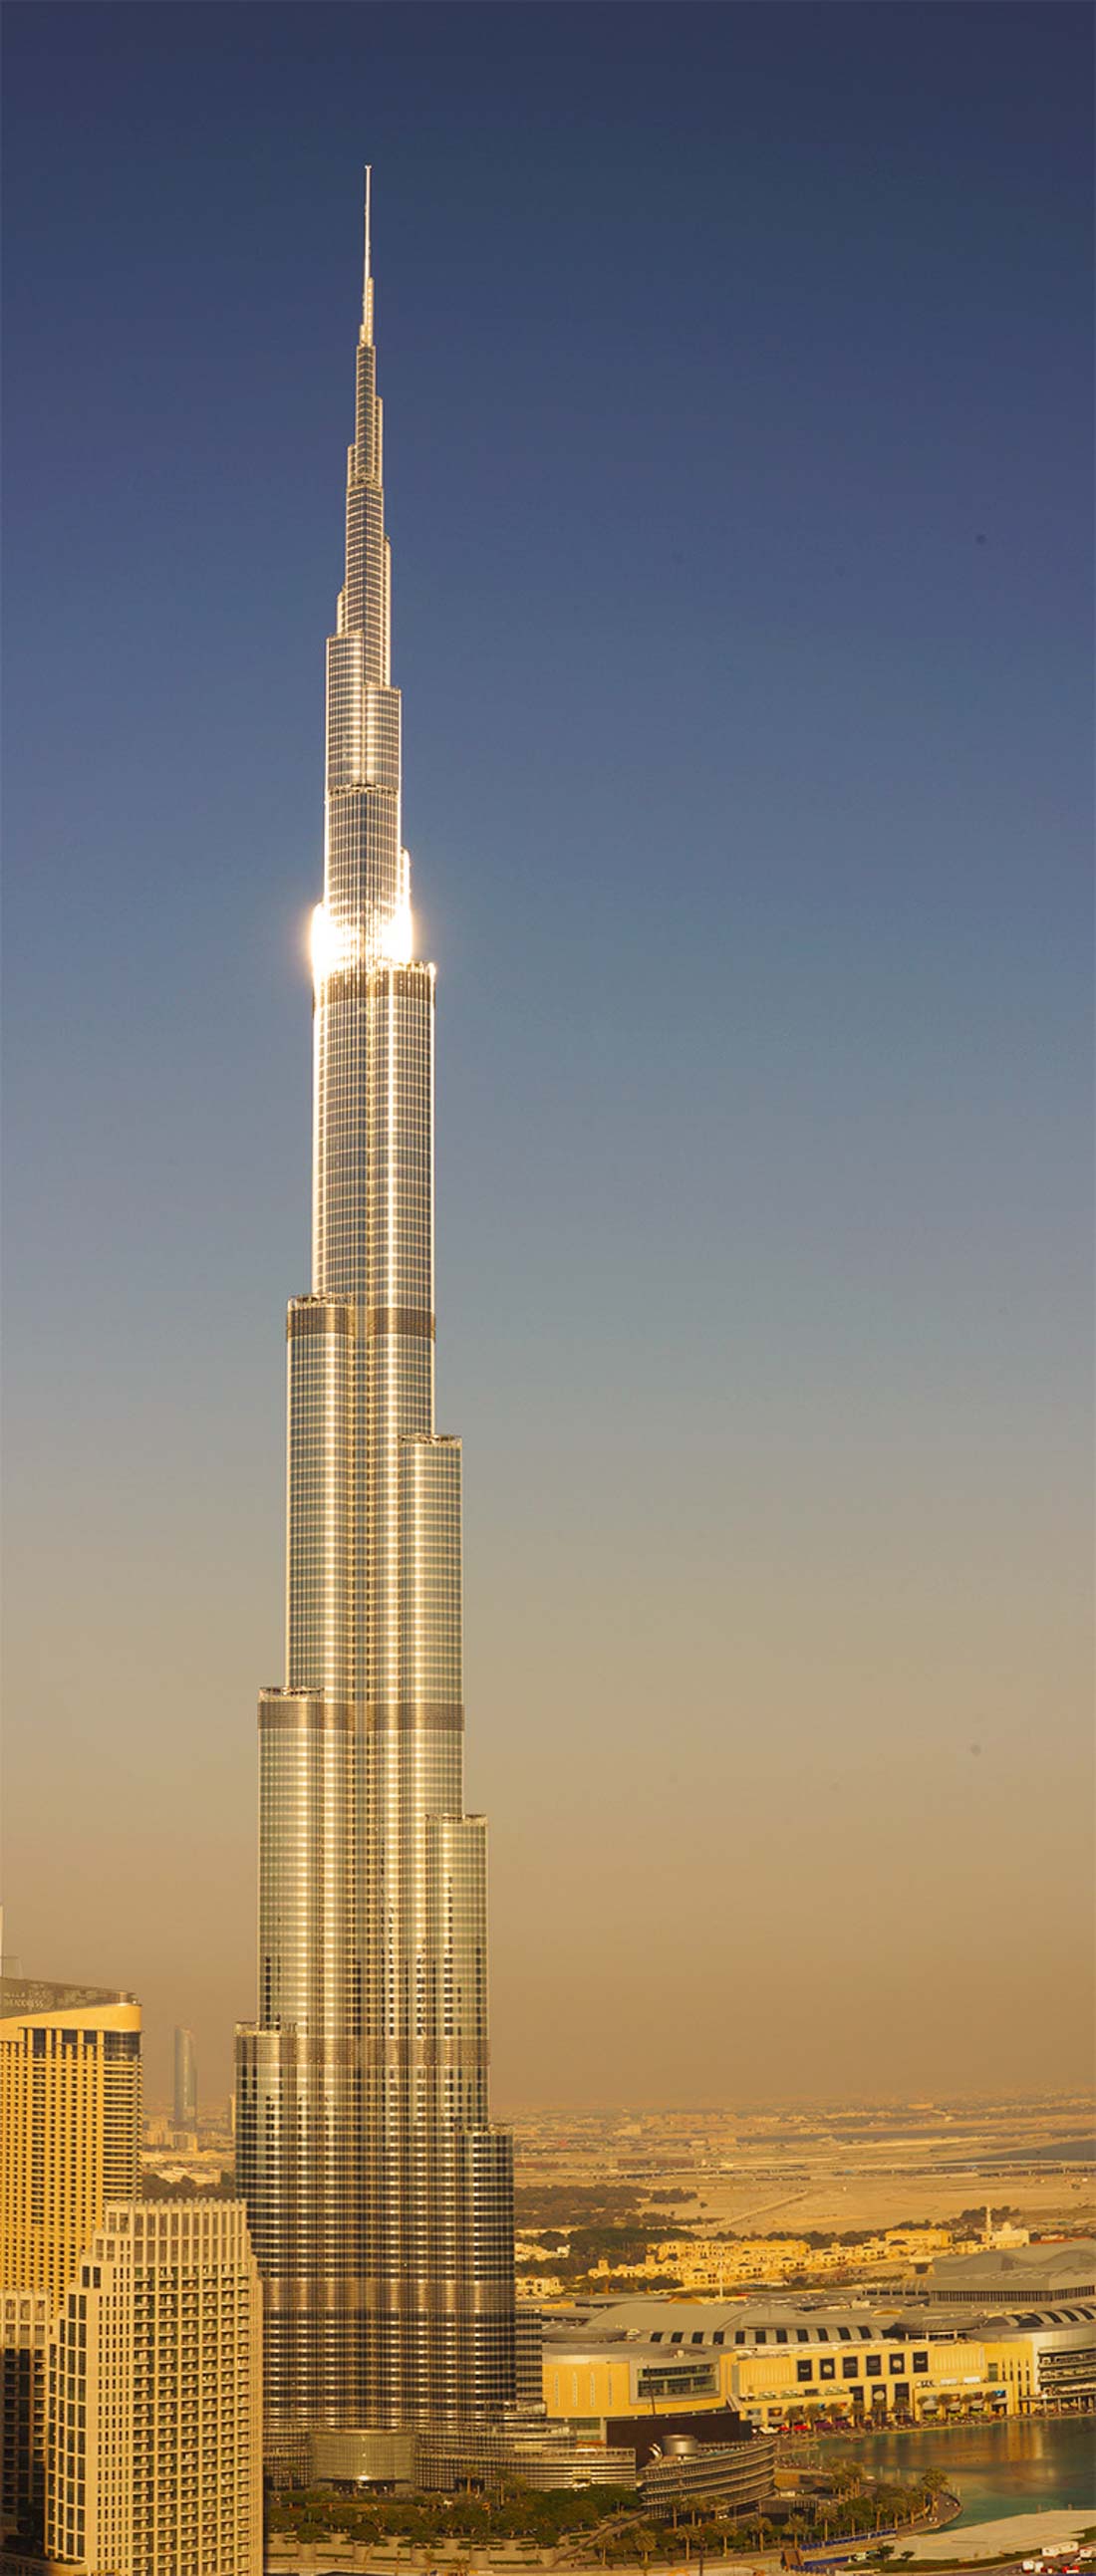 Бурдж халифа какие этажи. Бурдж-Халифа Дубай 148 этаж. Дубай Бурдж Халифа смотровая площадка 124 этаж. Бурдж Халифа смотровая площадка на 148 этаже. Смотровая площадка Бурдж Халифа Дубай 148 этаж.